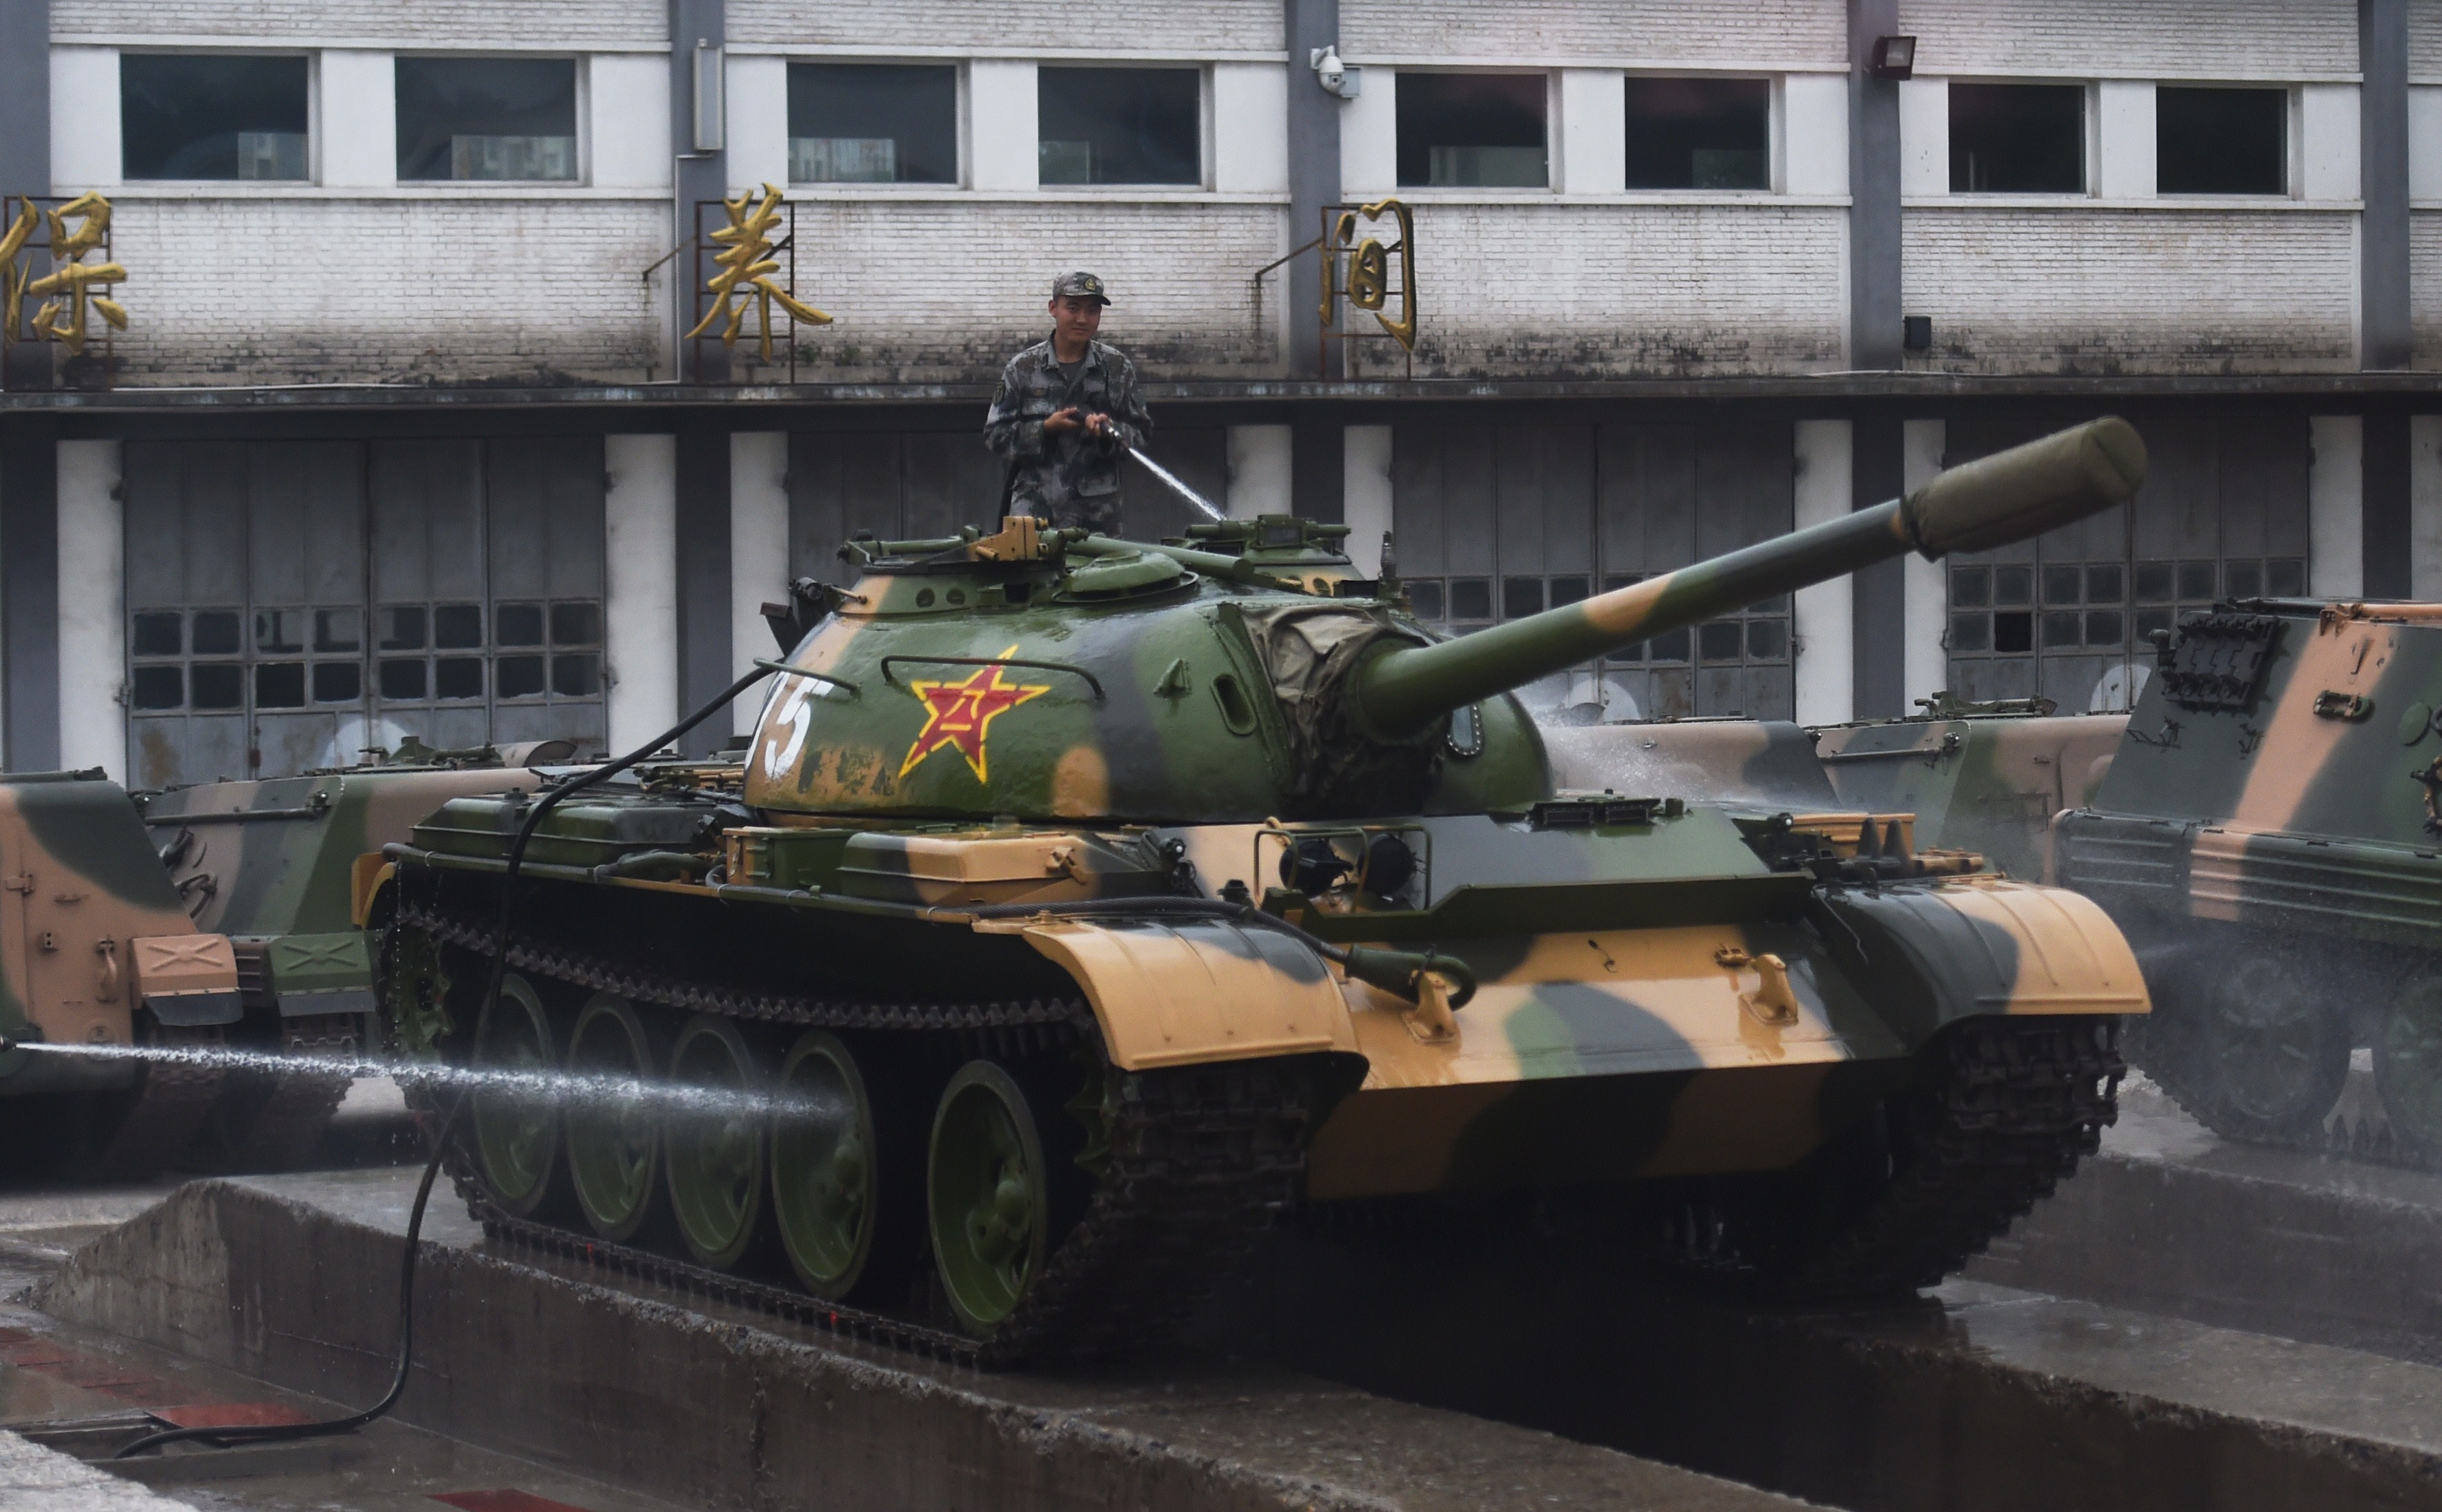 chinas main battle tank